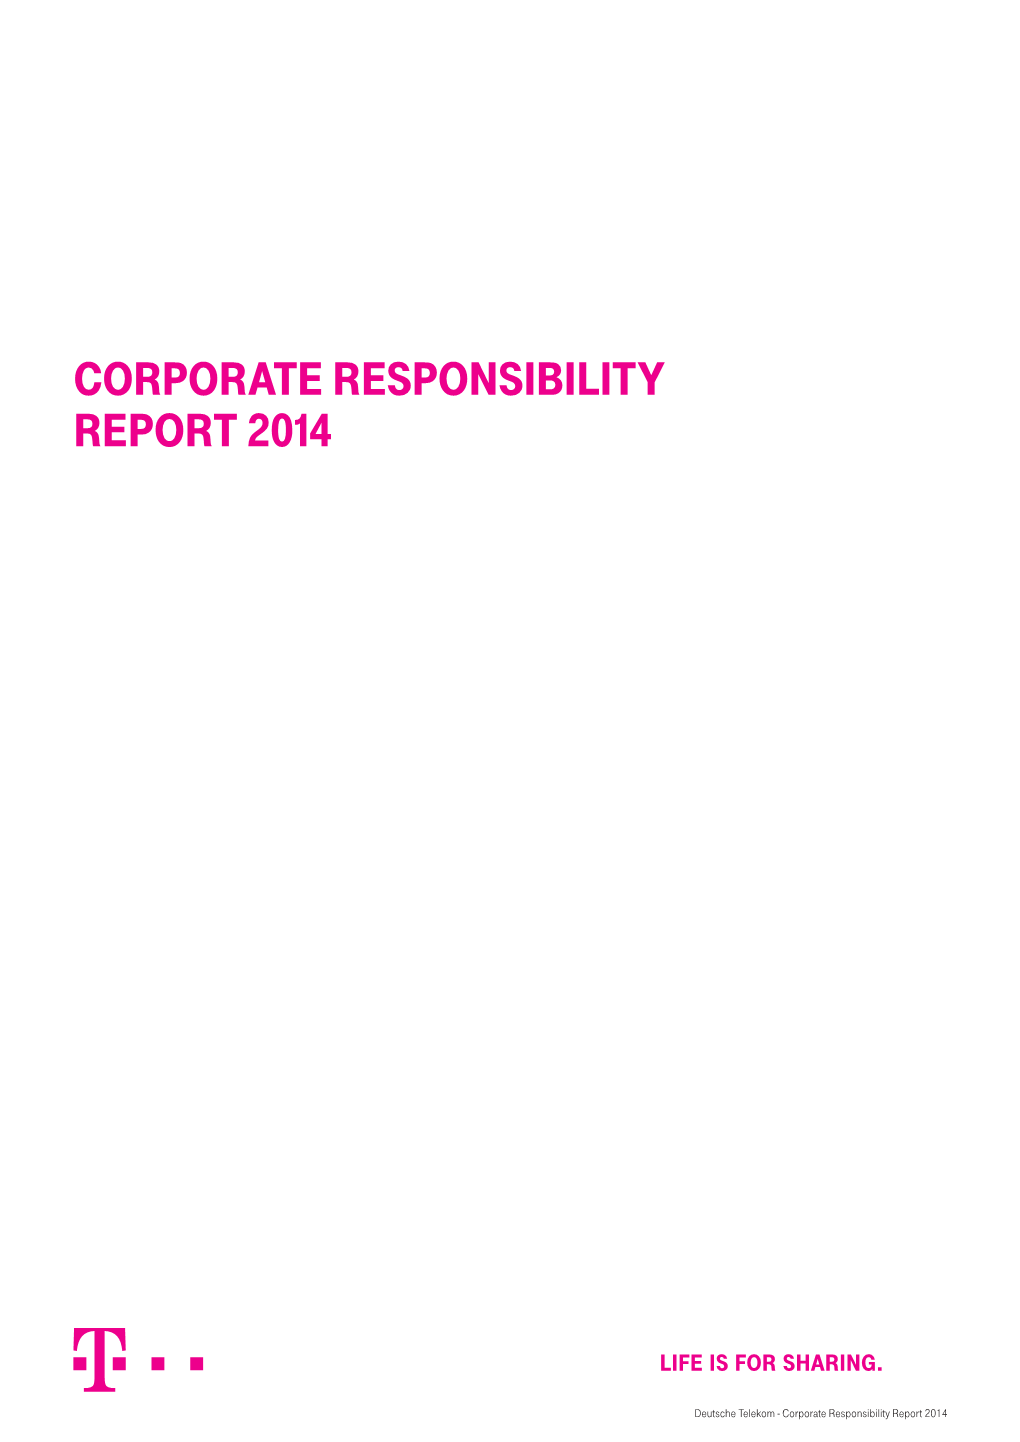 Corporate Responsibility Report 2014